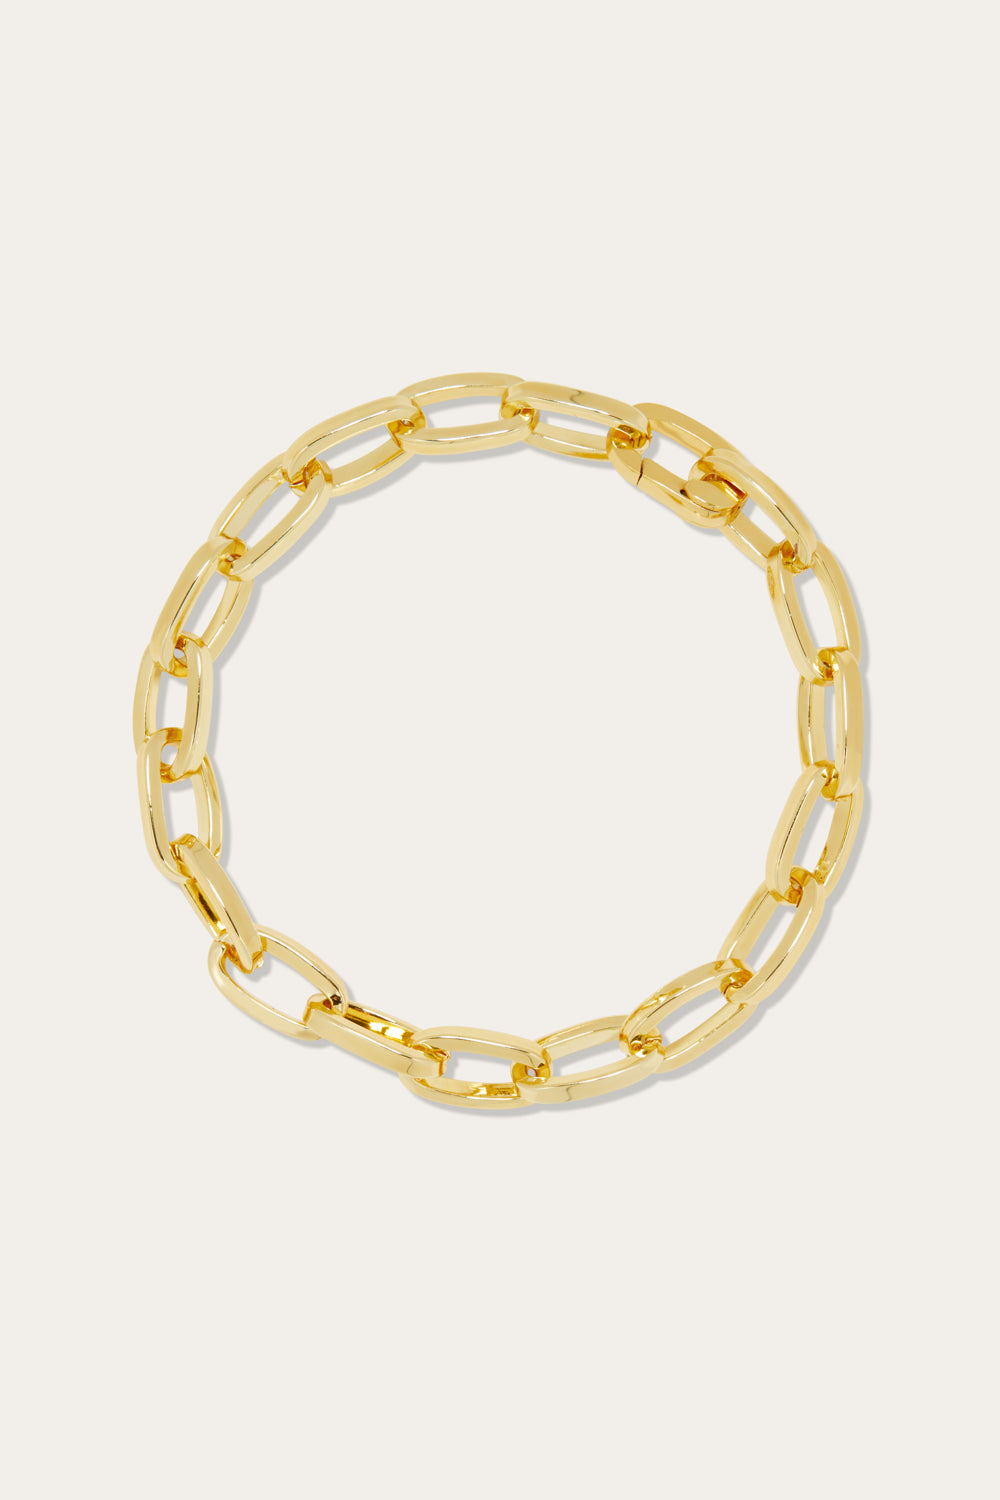 Cara gold plated chain anklet/bracelet